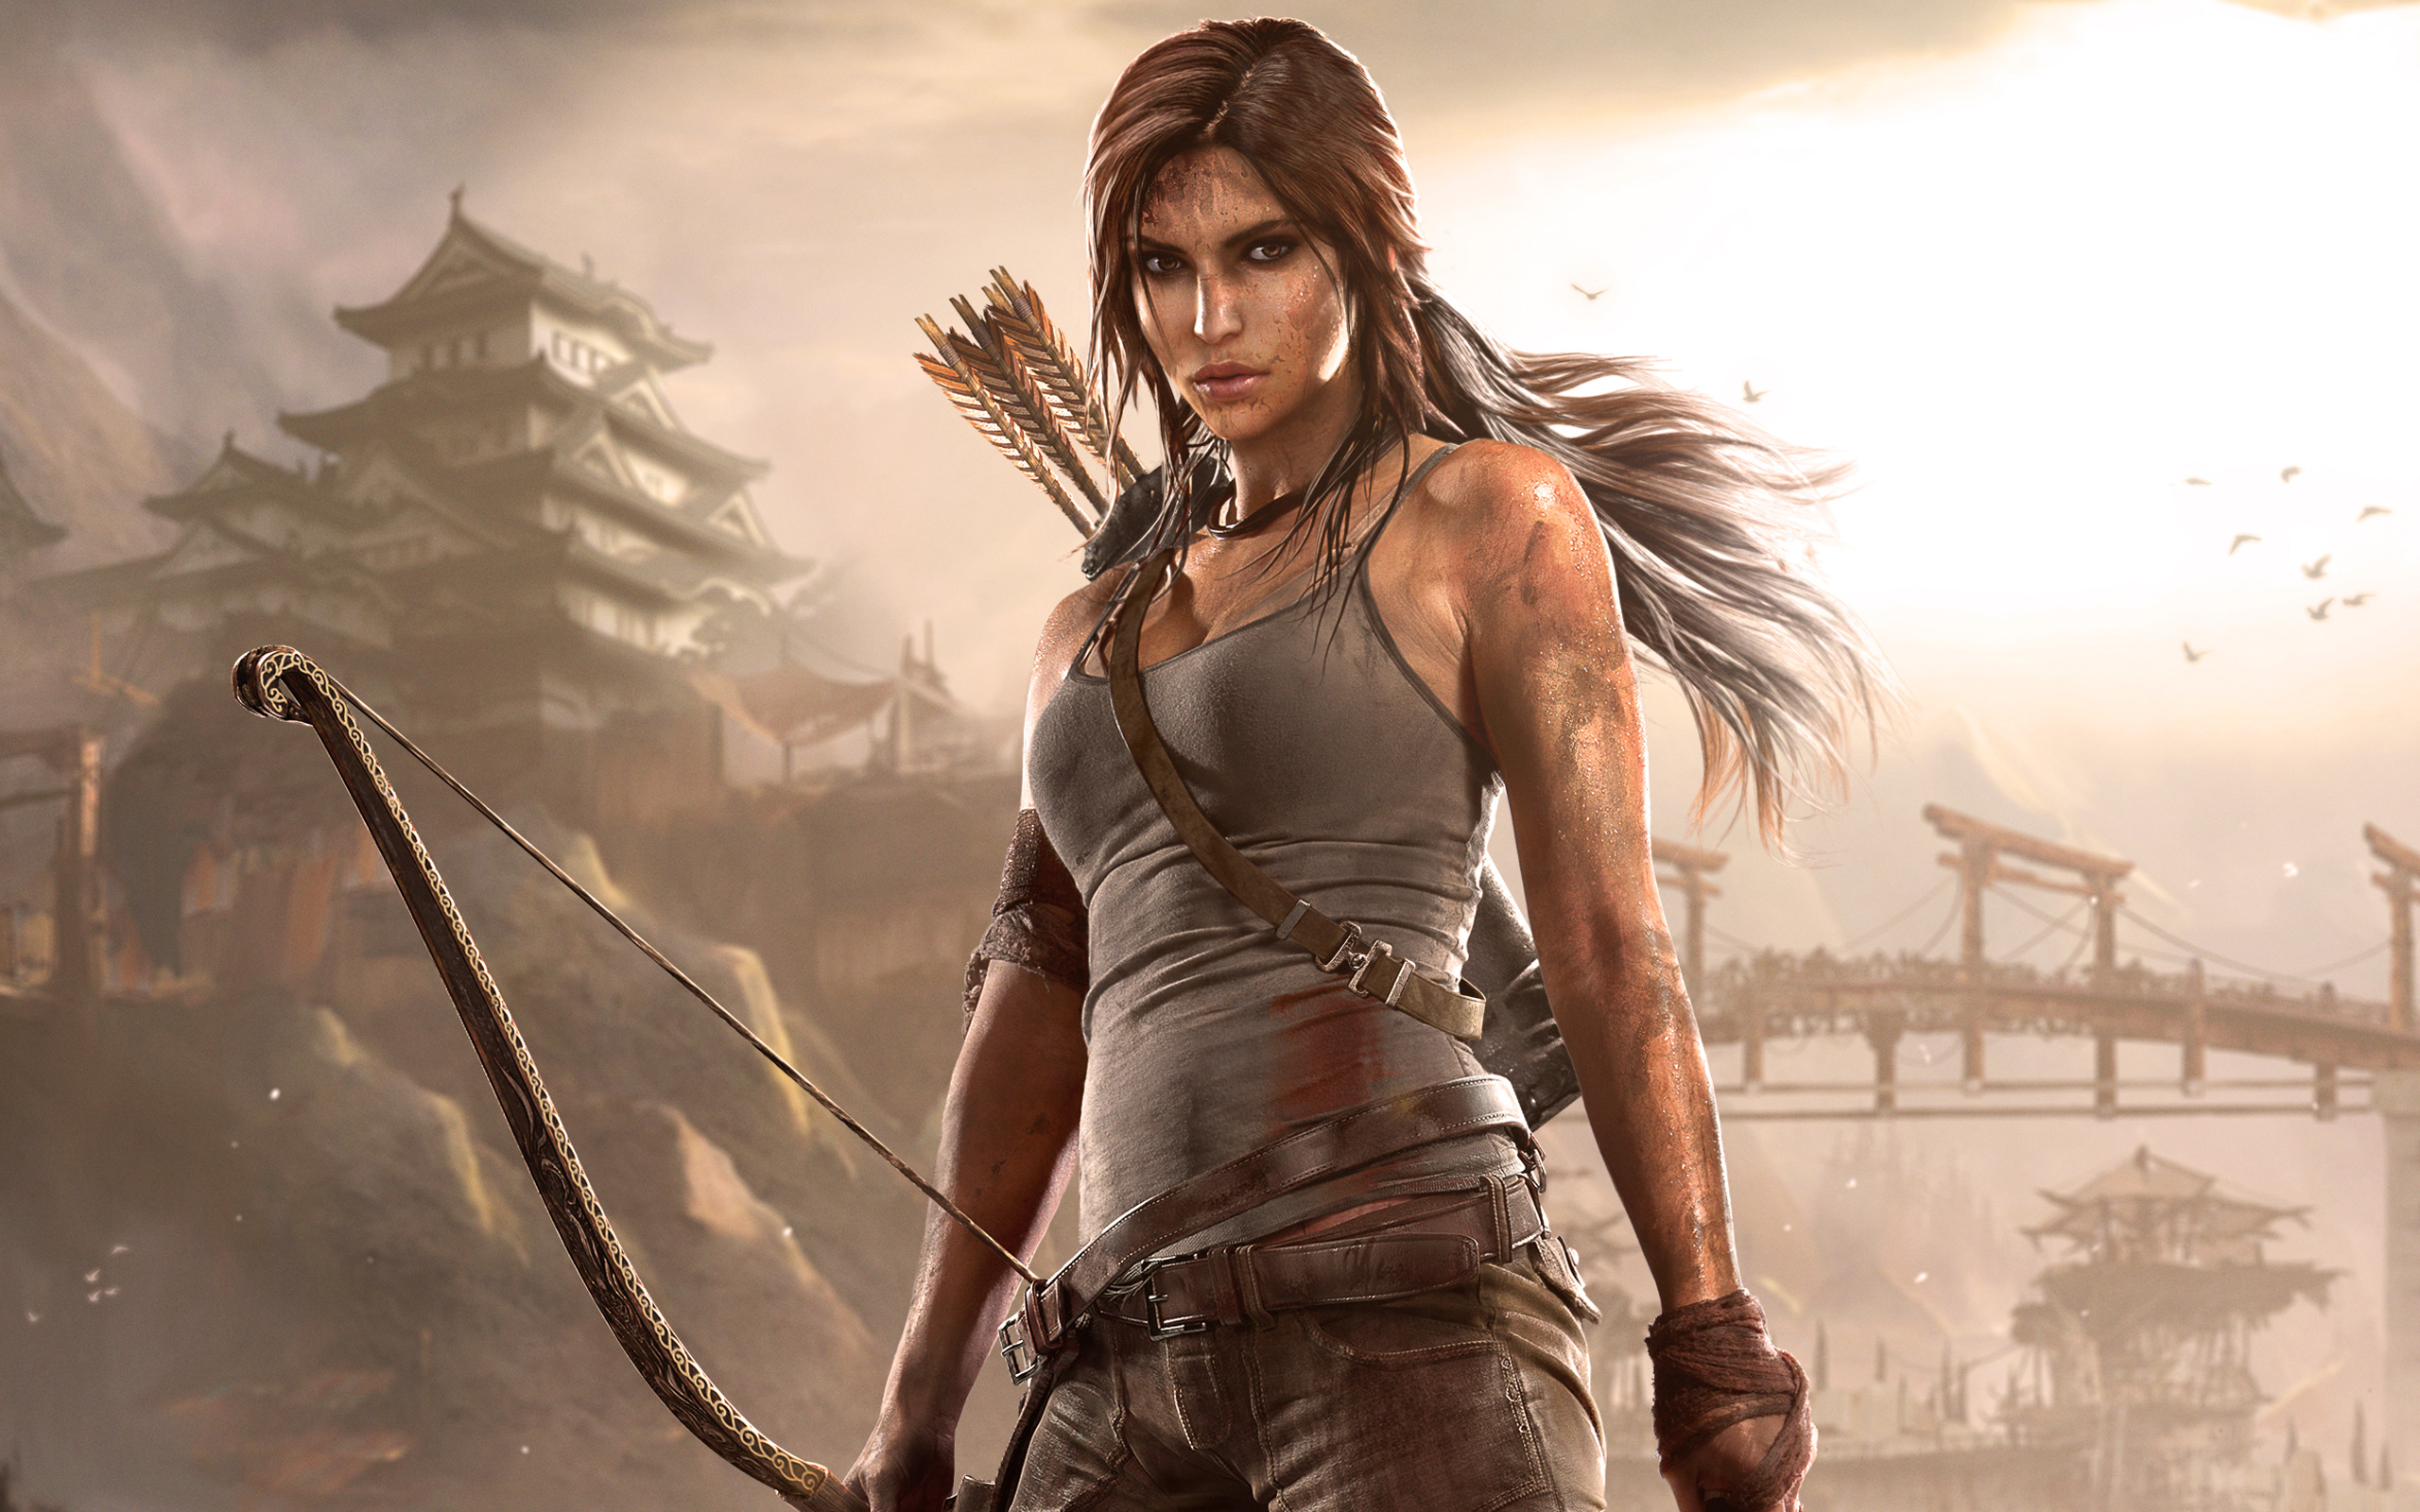 Working on Tomb Raider!